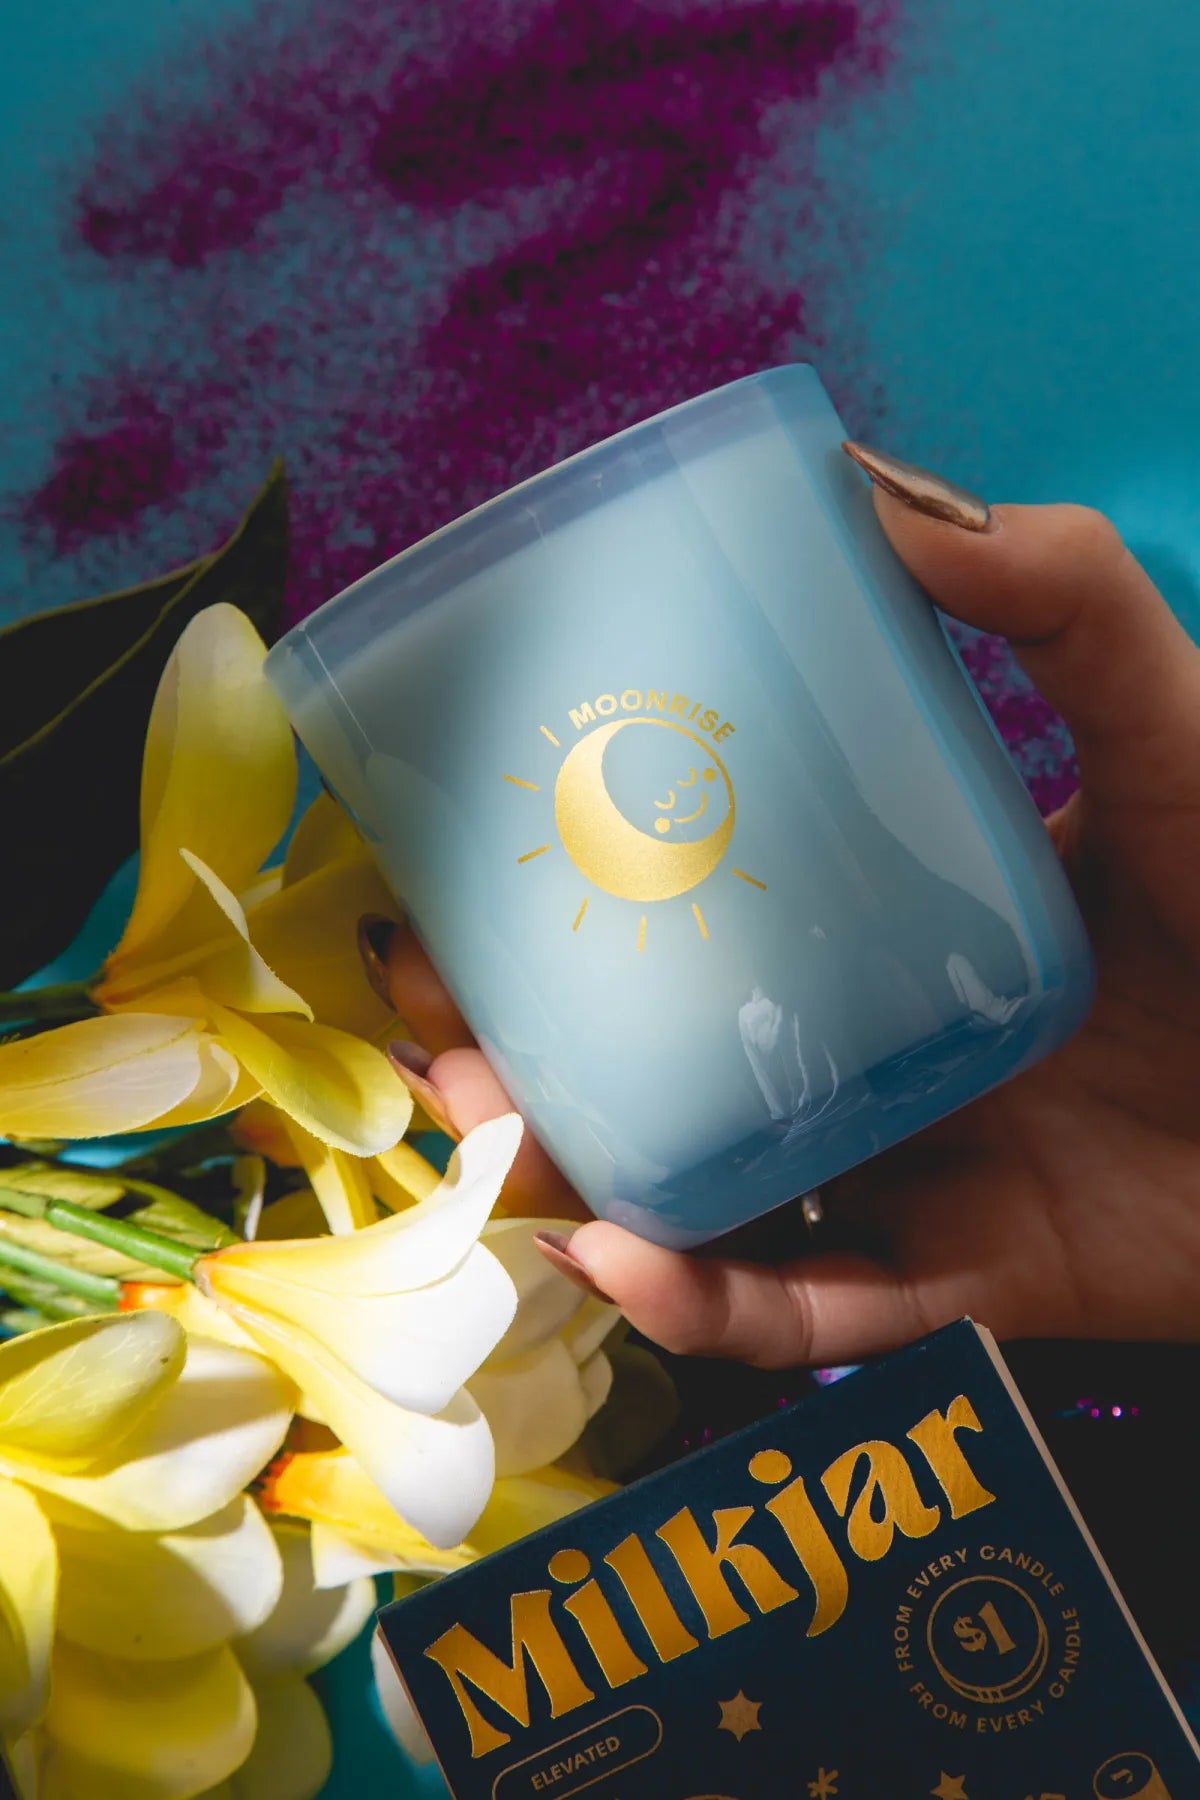 milk jar candle - moonrise